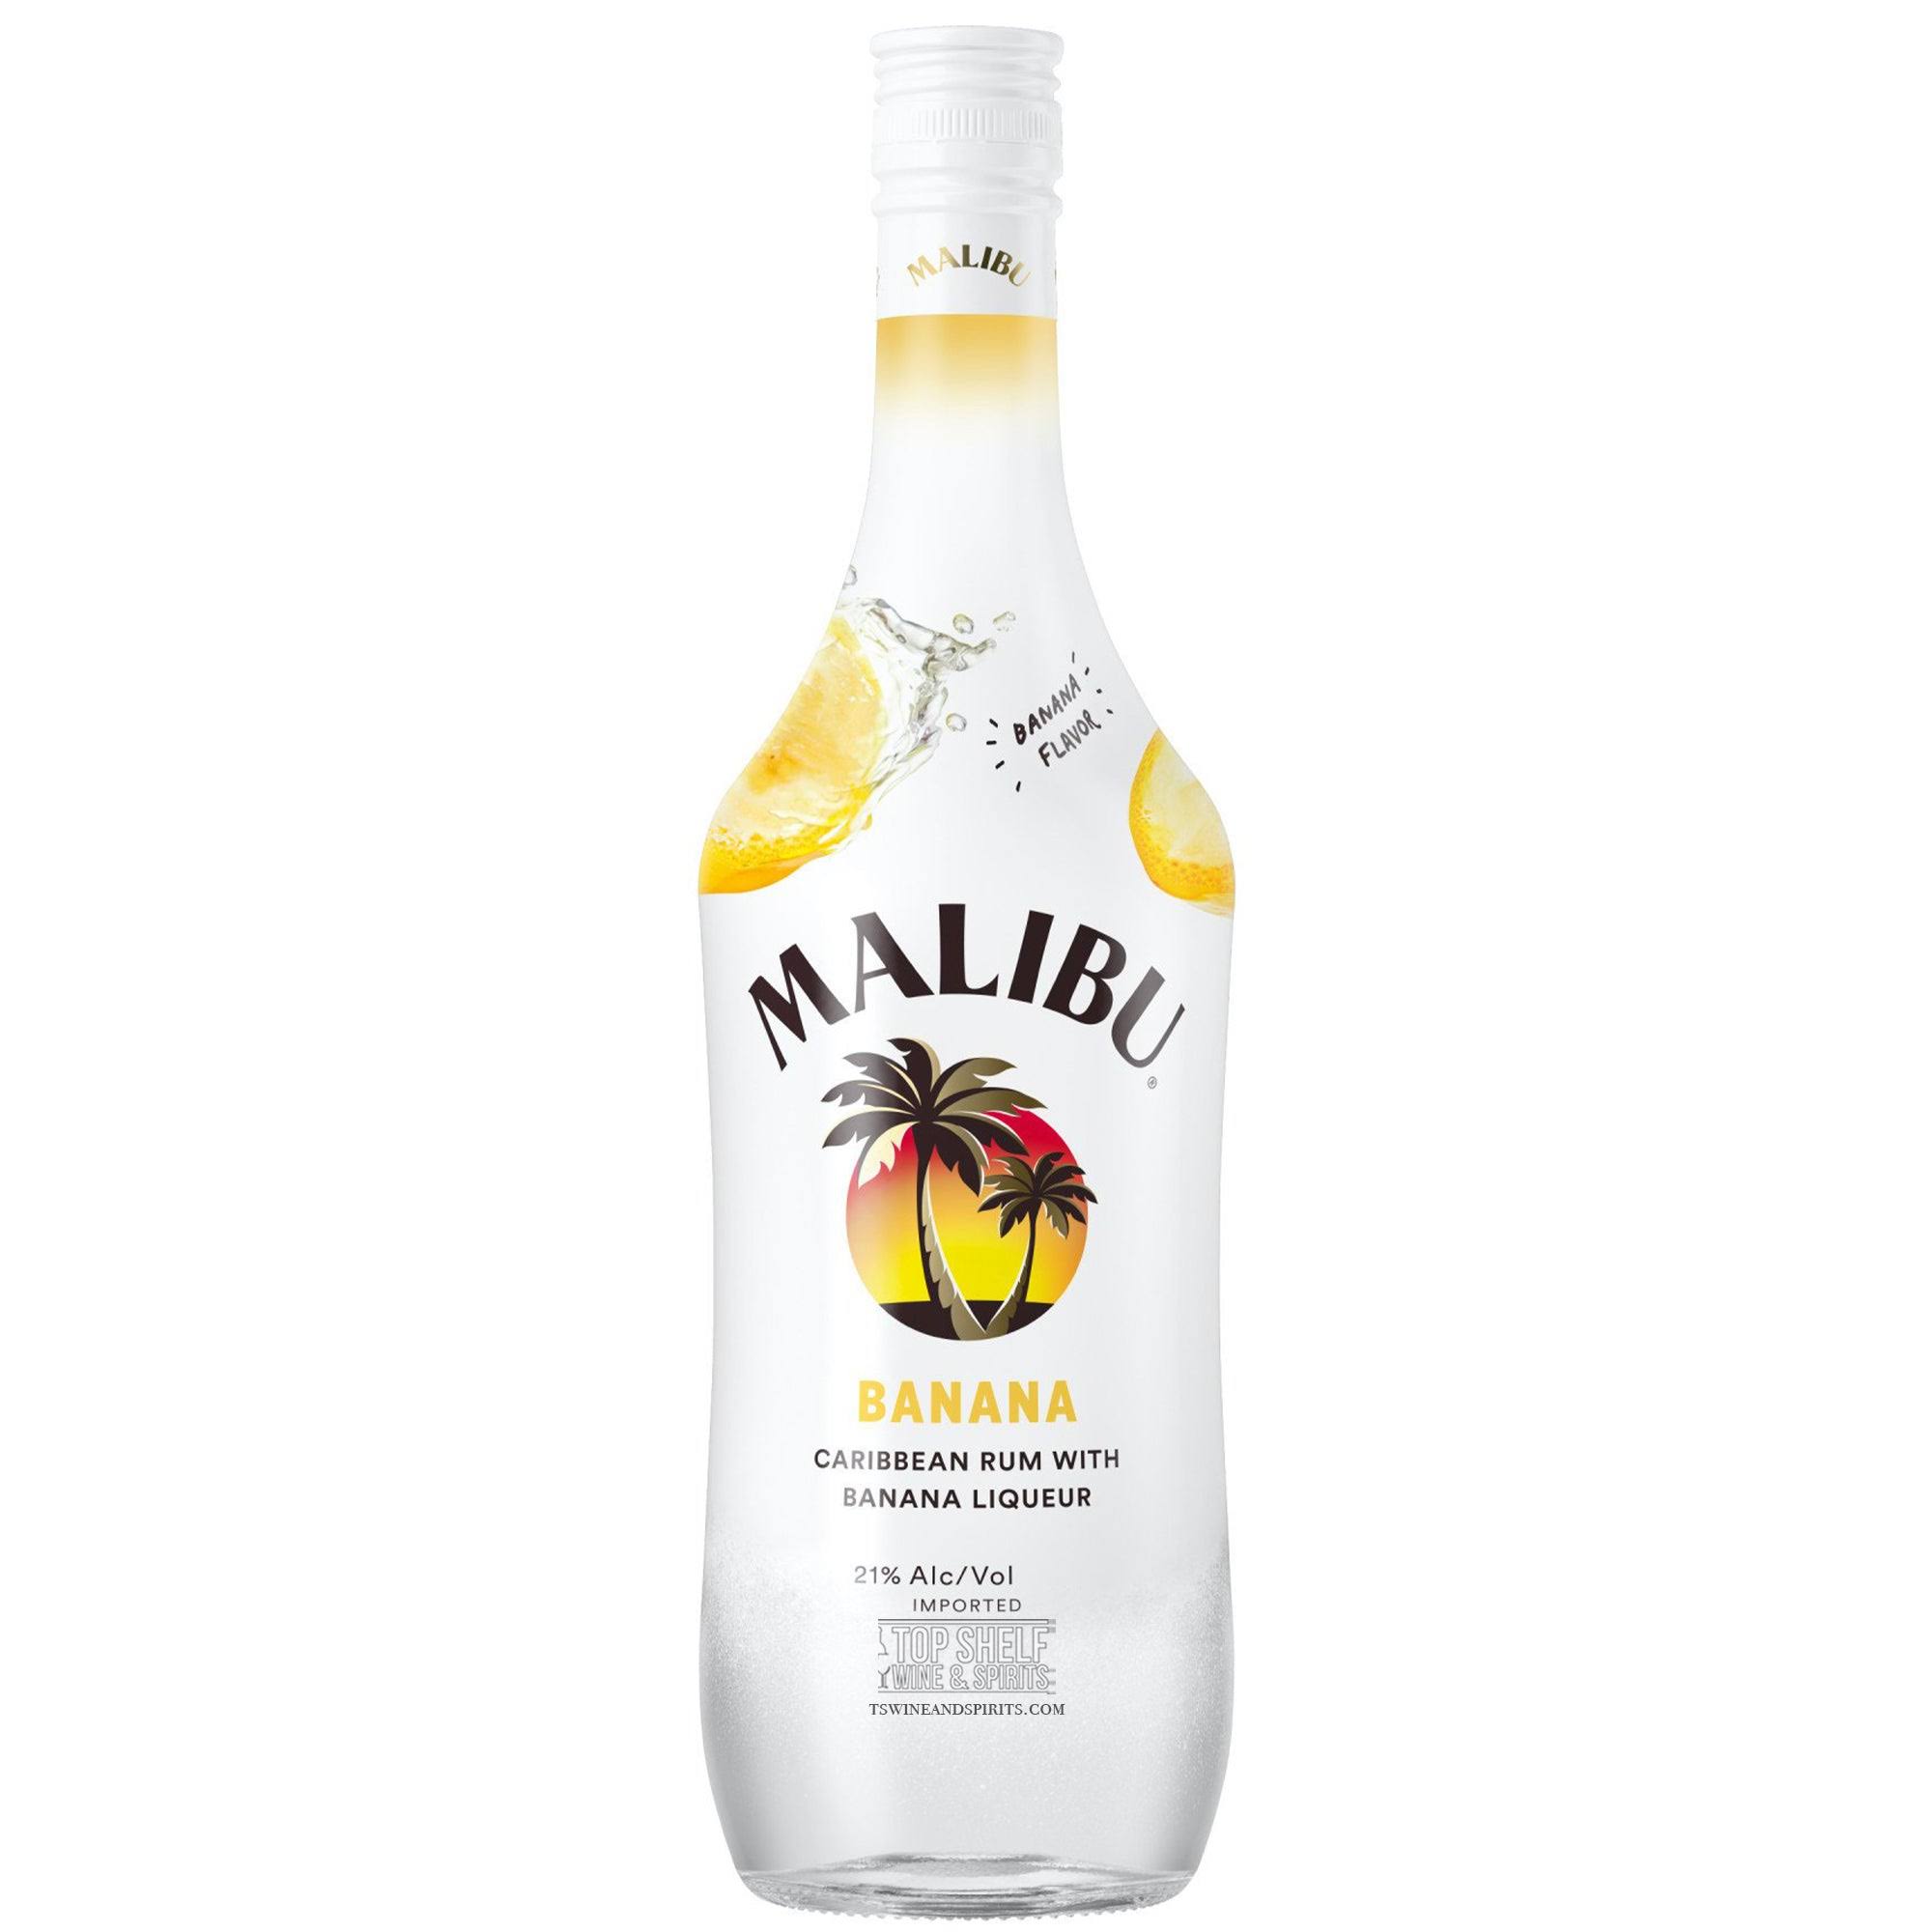 Malibu Caribbean Rum - Tropical Banana, 750ml